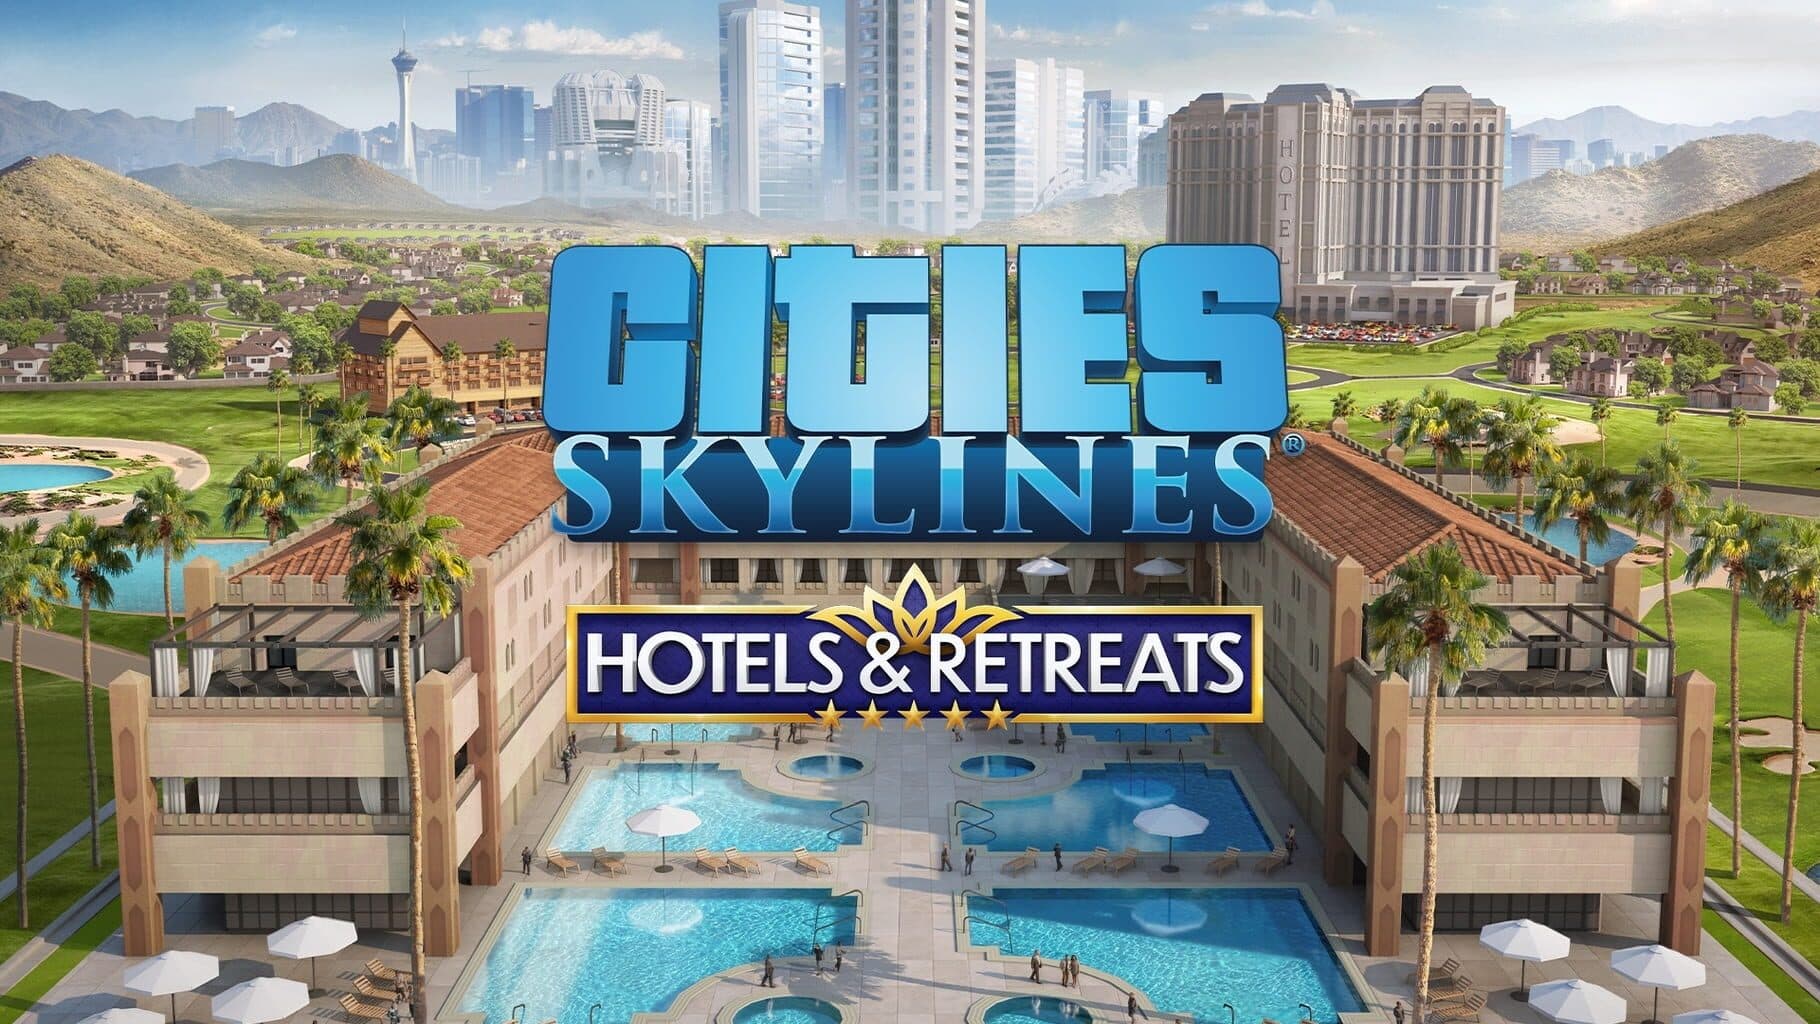 Cities: Skylines - Hotels & Retreats cover art